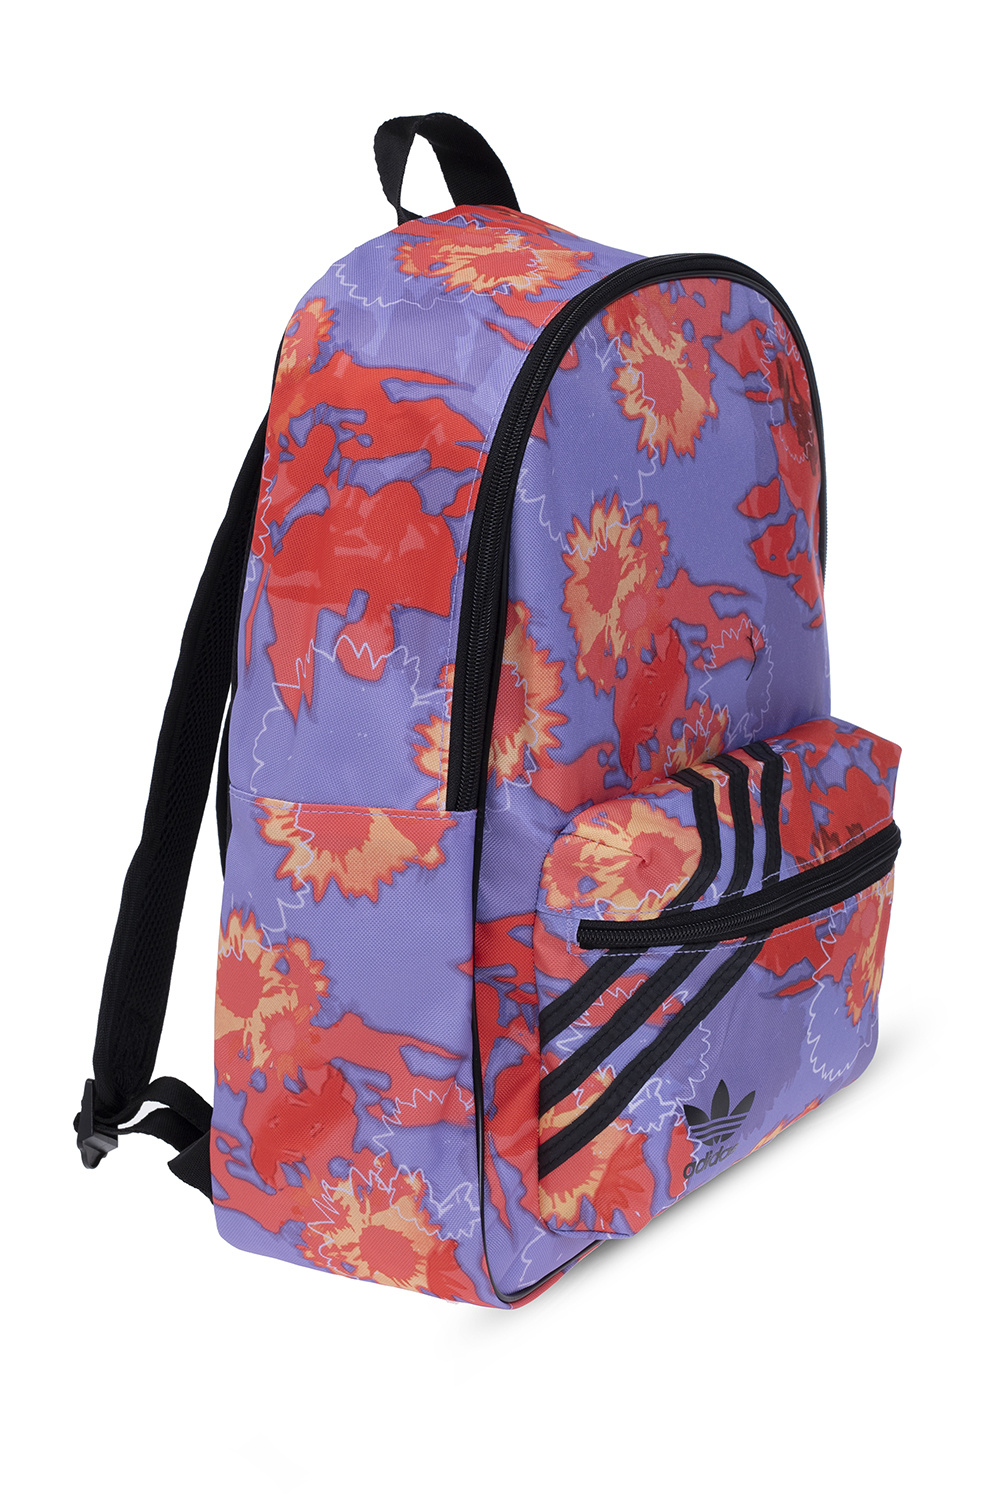 adidas trail Originals Patterned backpack